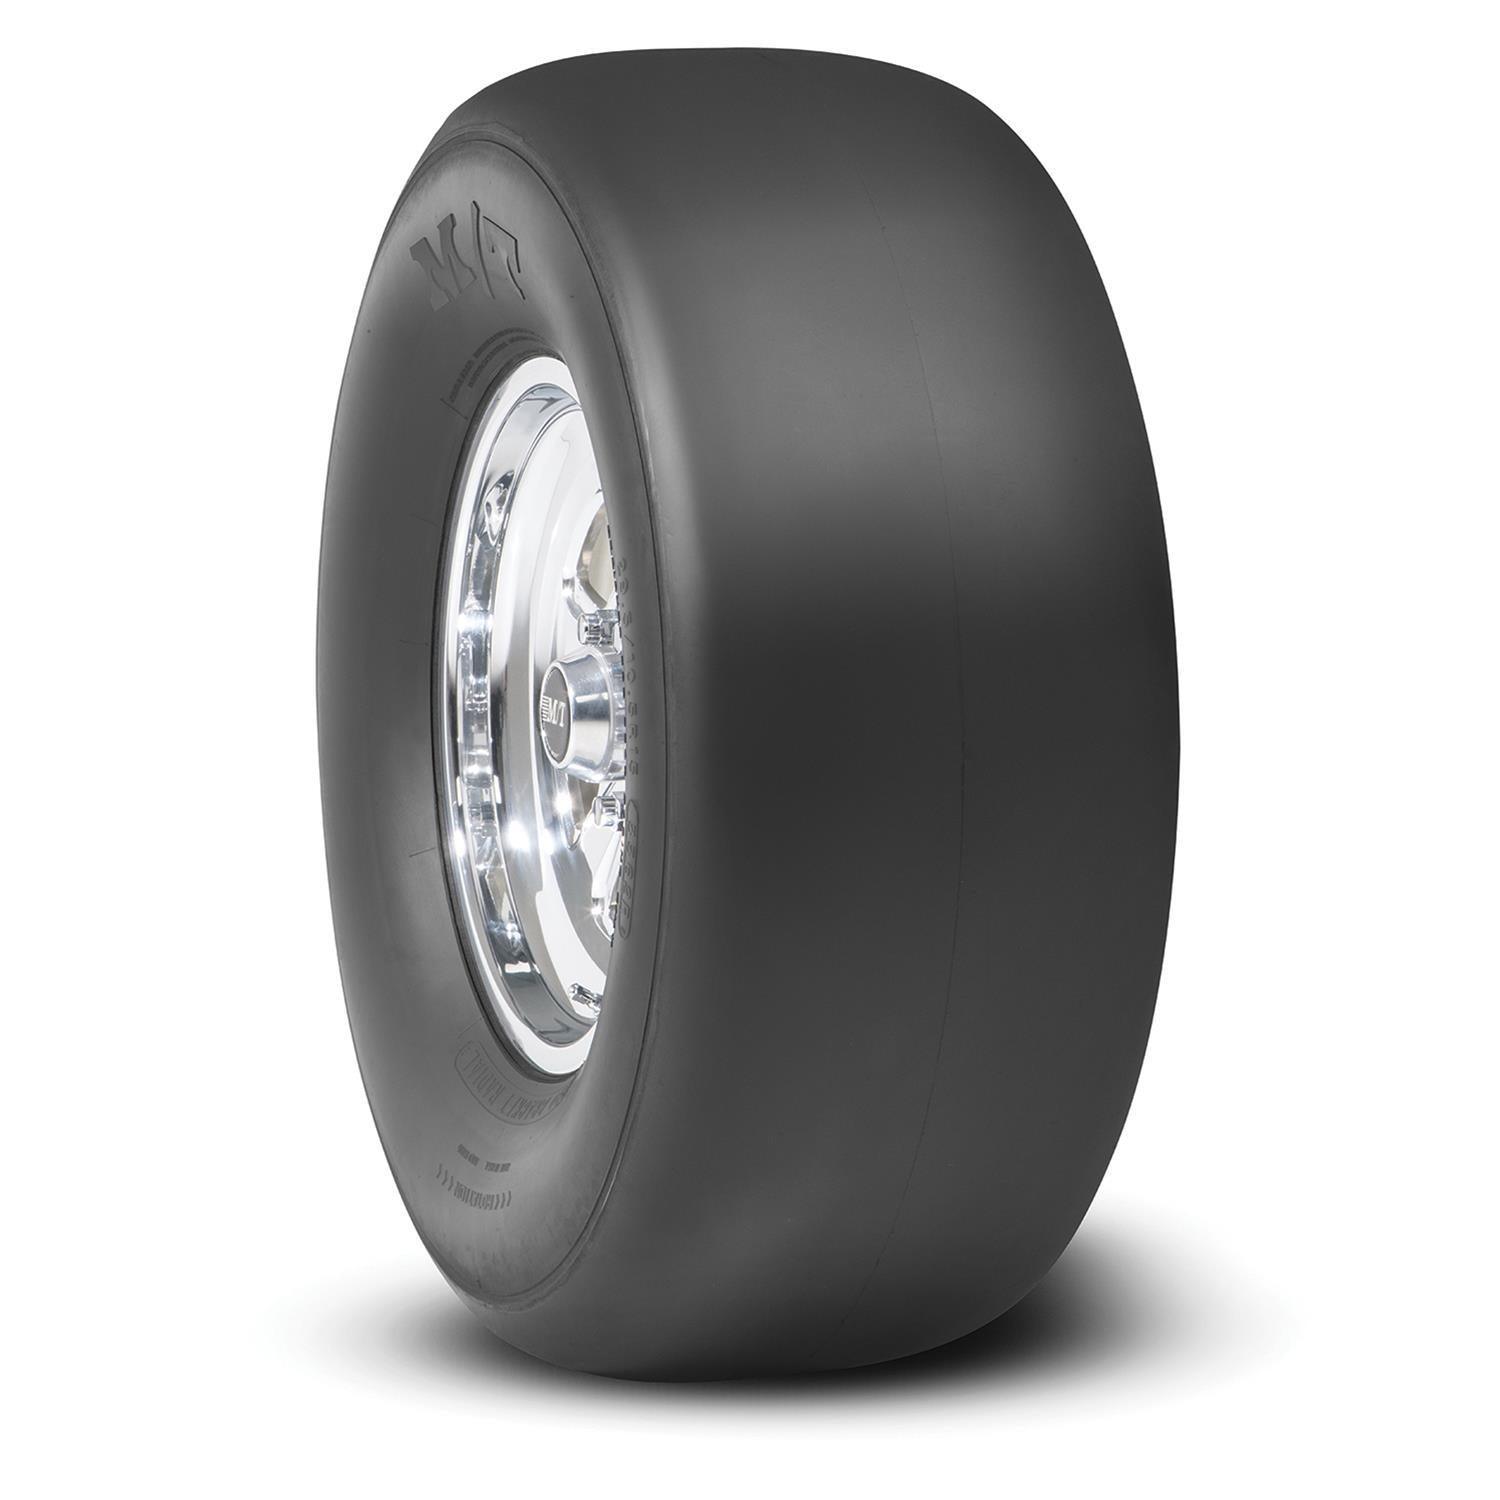 28.0/10.5R15x5 Drag Pro Bracket Radial Tire - Burlile Performance Products